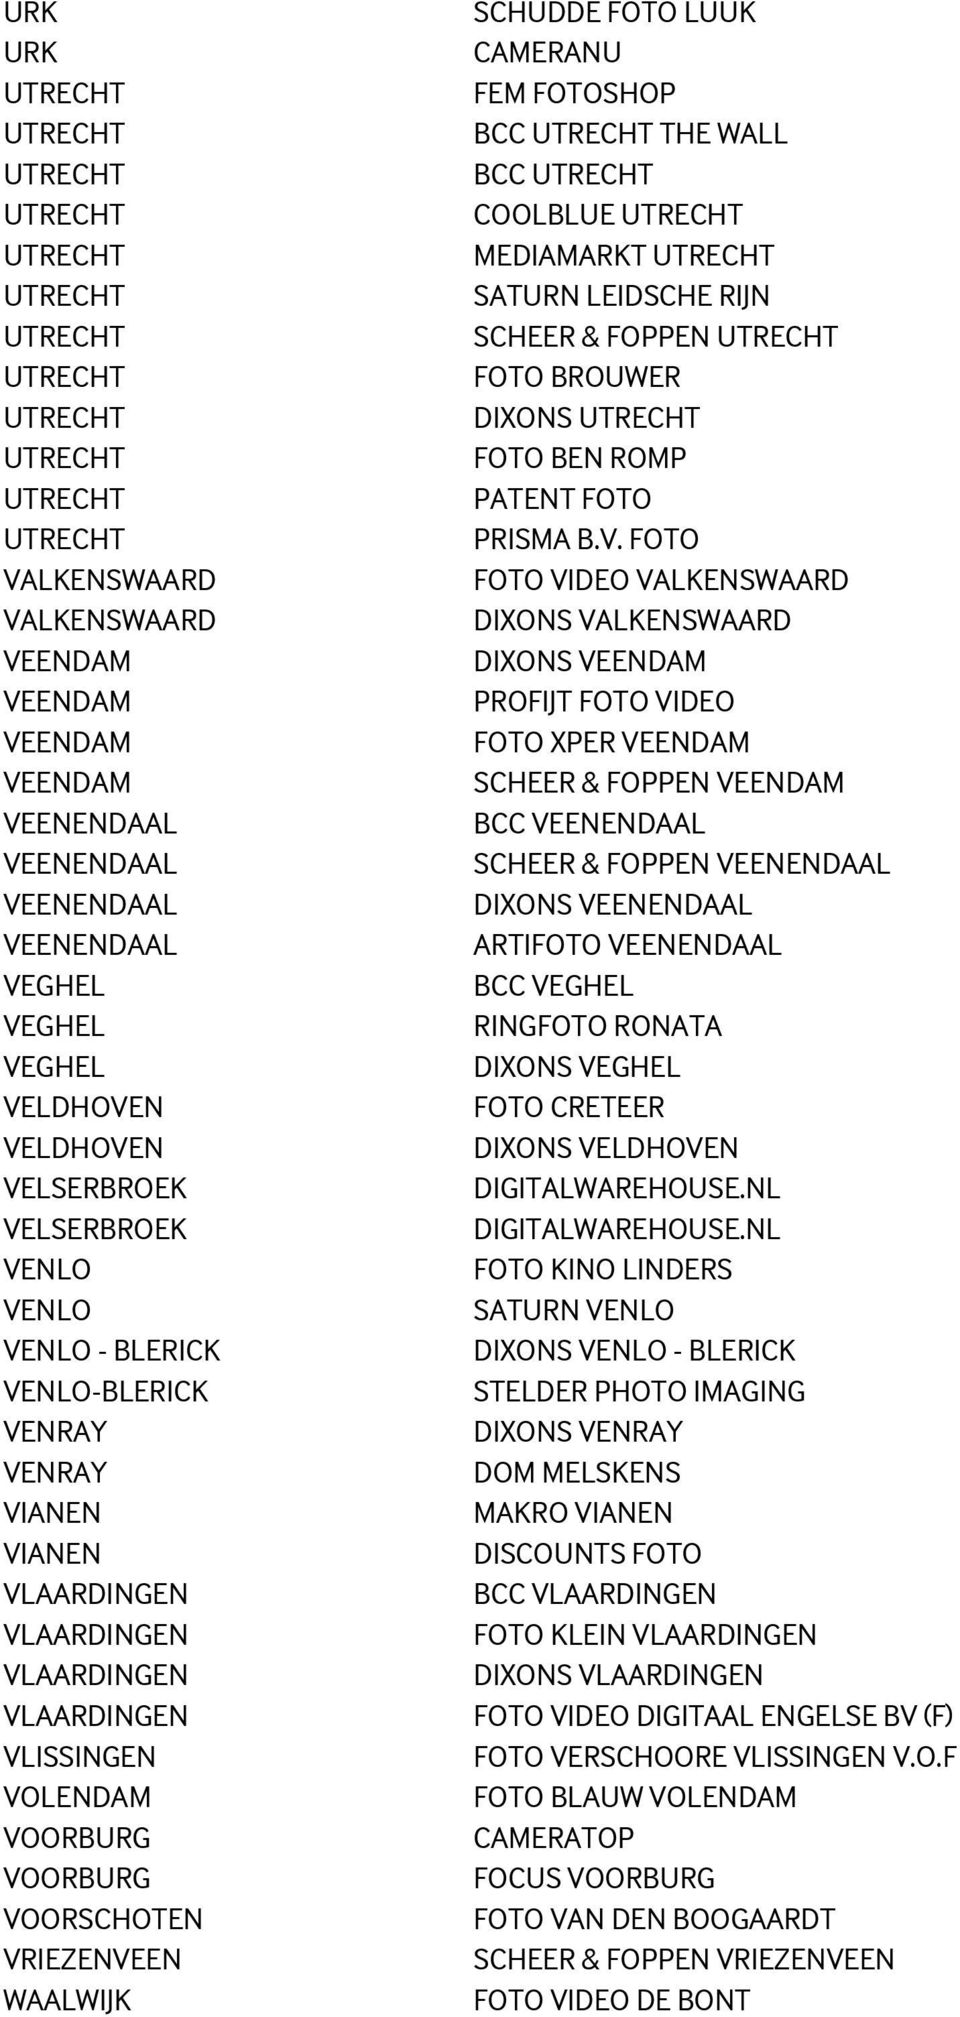 FOTOSHOP BCC THE WALL BCC COOLBLUE MEDIAMARKT SATURN LEIDSCHE RIJN SCHEER & FOPPEN FOTO BROUWER DIXONS FOTO BEN ROMP PATENT FOTO PRISMA B.V.